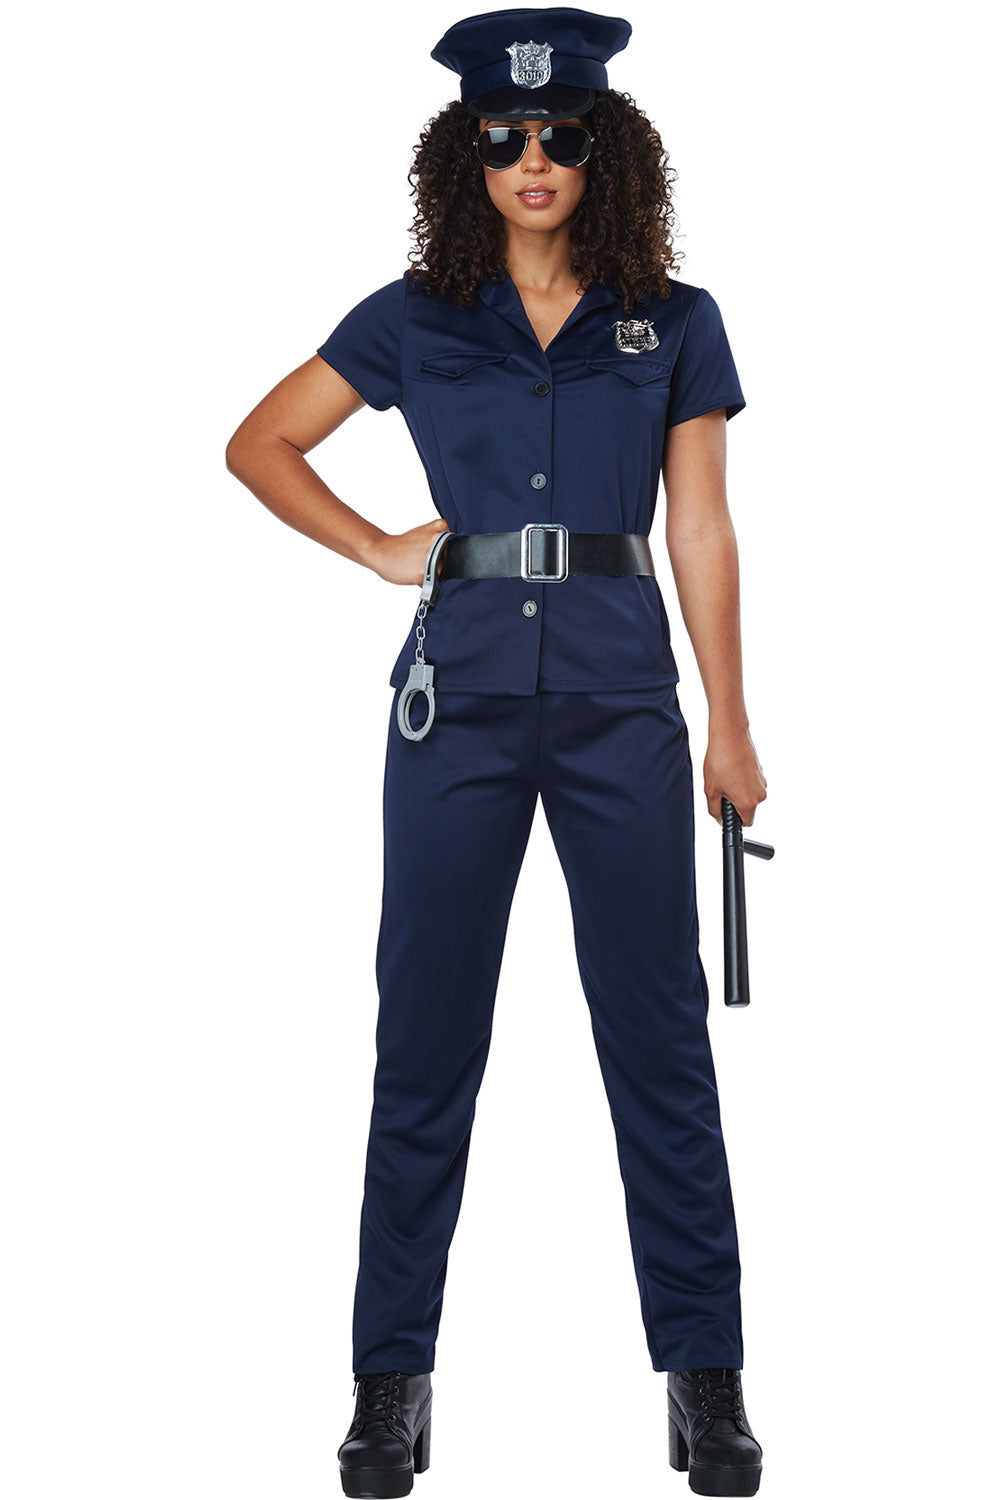 POLICE WOMAN/ADULT California Costume 01570